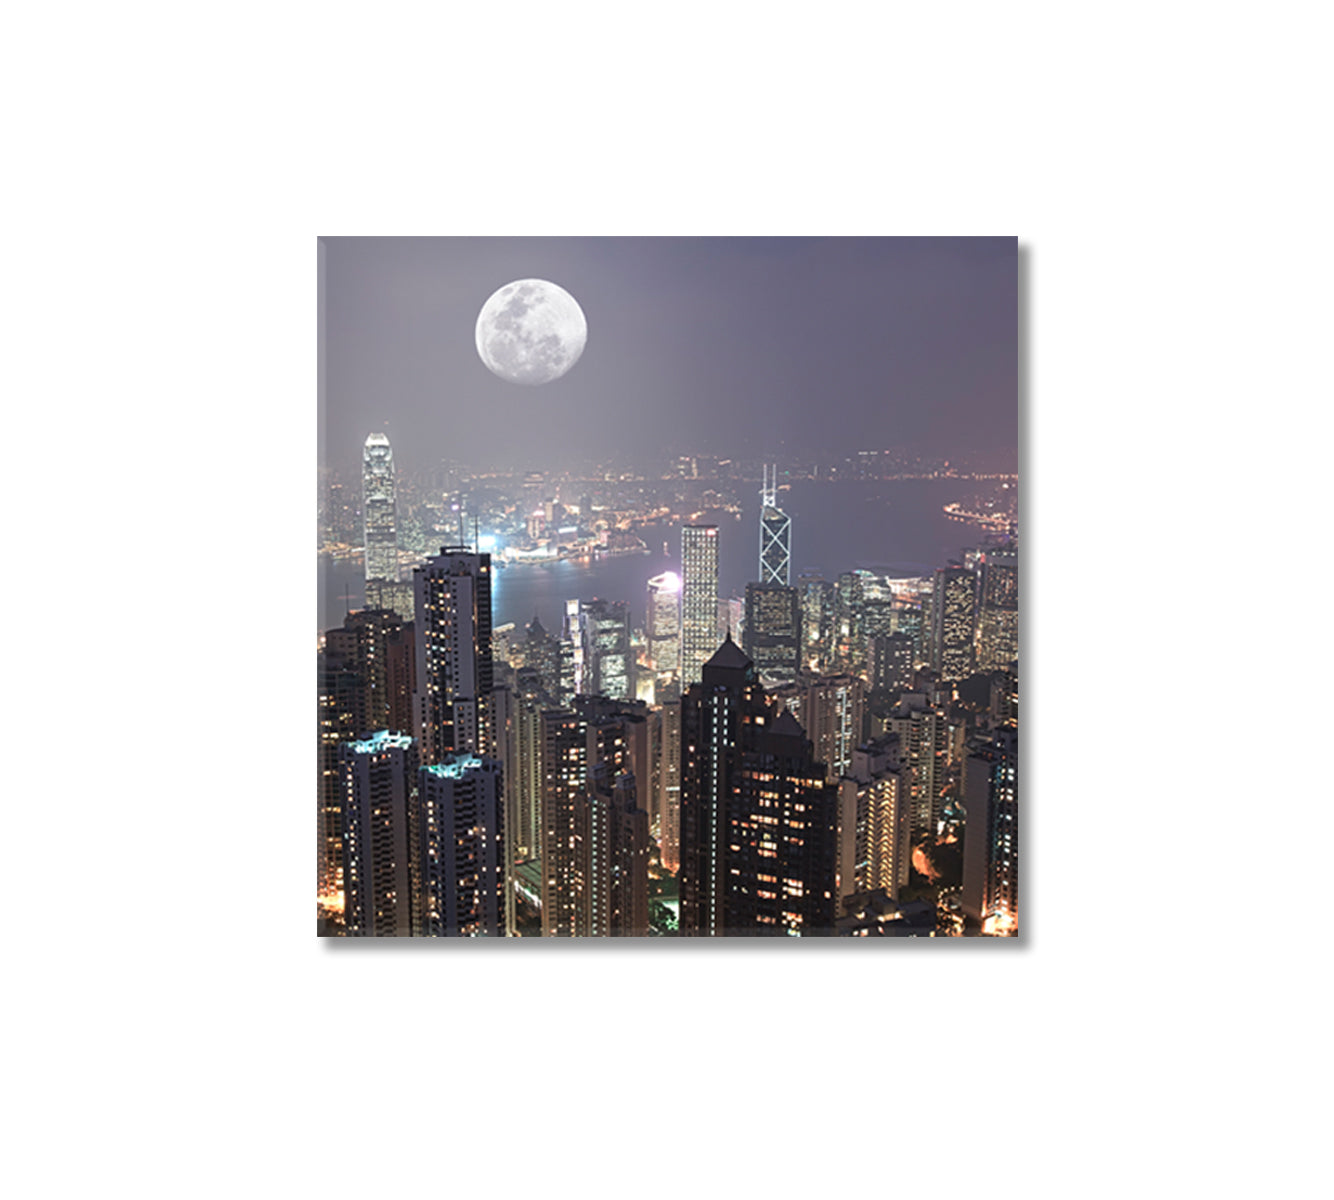 Skyline of Hong Kong City Canvas Print-Canvas Print-CetArt-1 panel-12x12 inches-CetArt